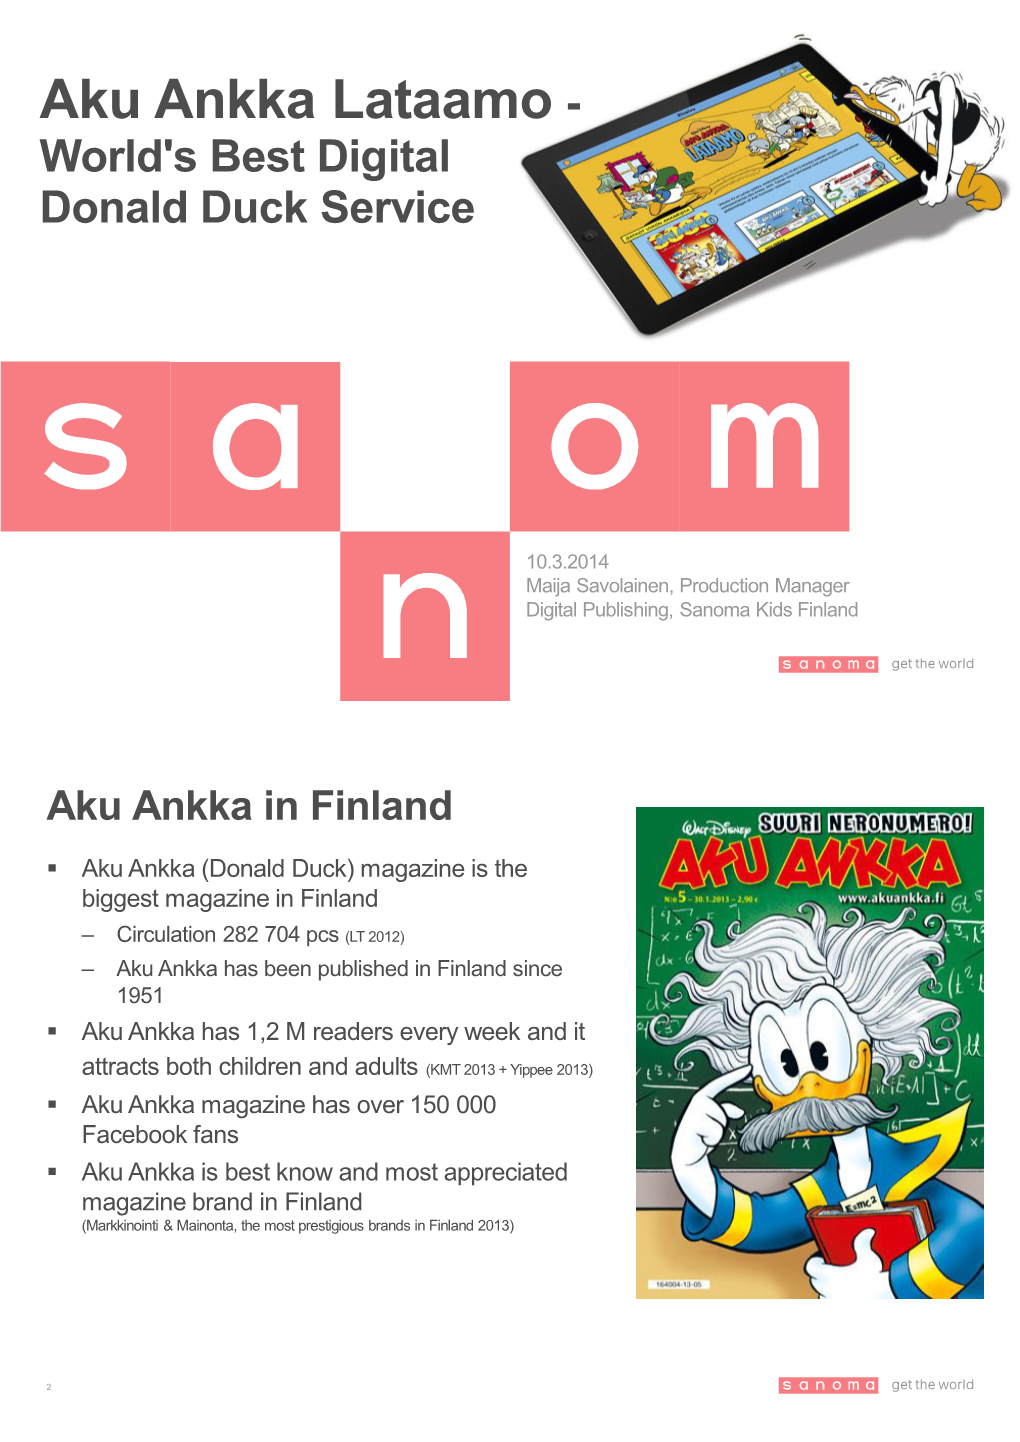 Aku Ankka Lataamo - World's Best Digital Donald Duck Service